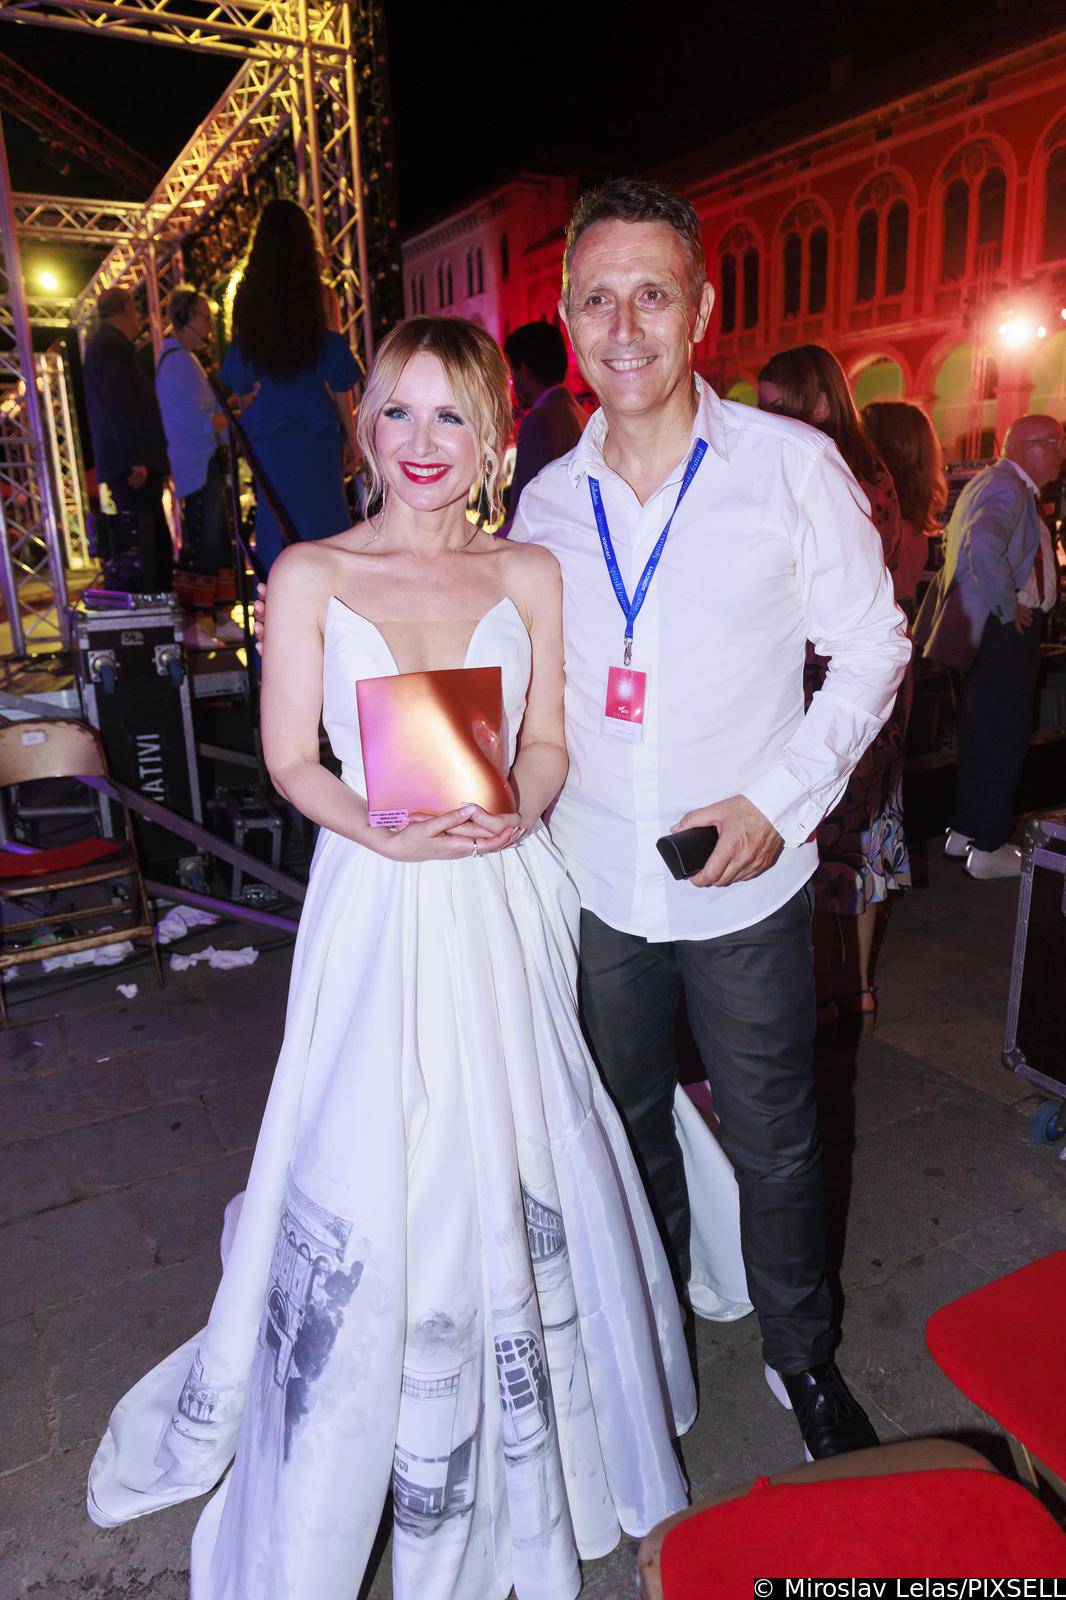 Festival zabavne glazbe Split 2022., nagradu žirija osvojila Lorena, a nagradu publike dobio Luka Nižetić